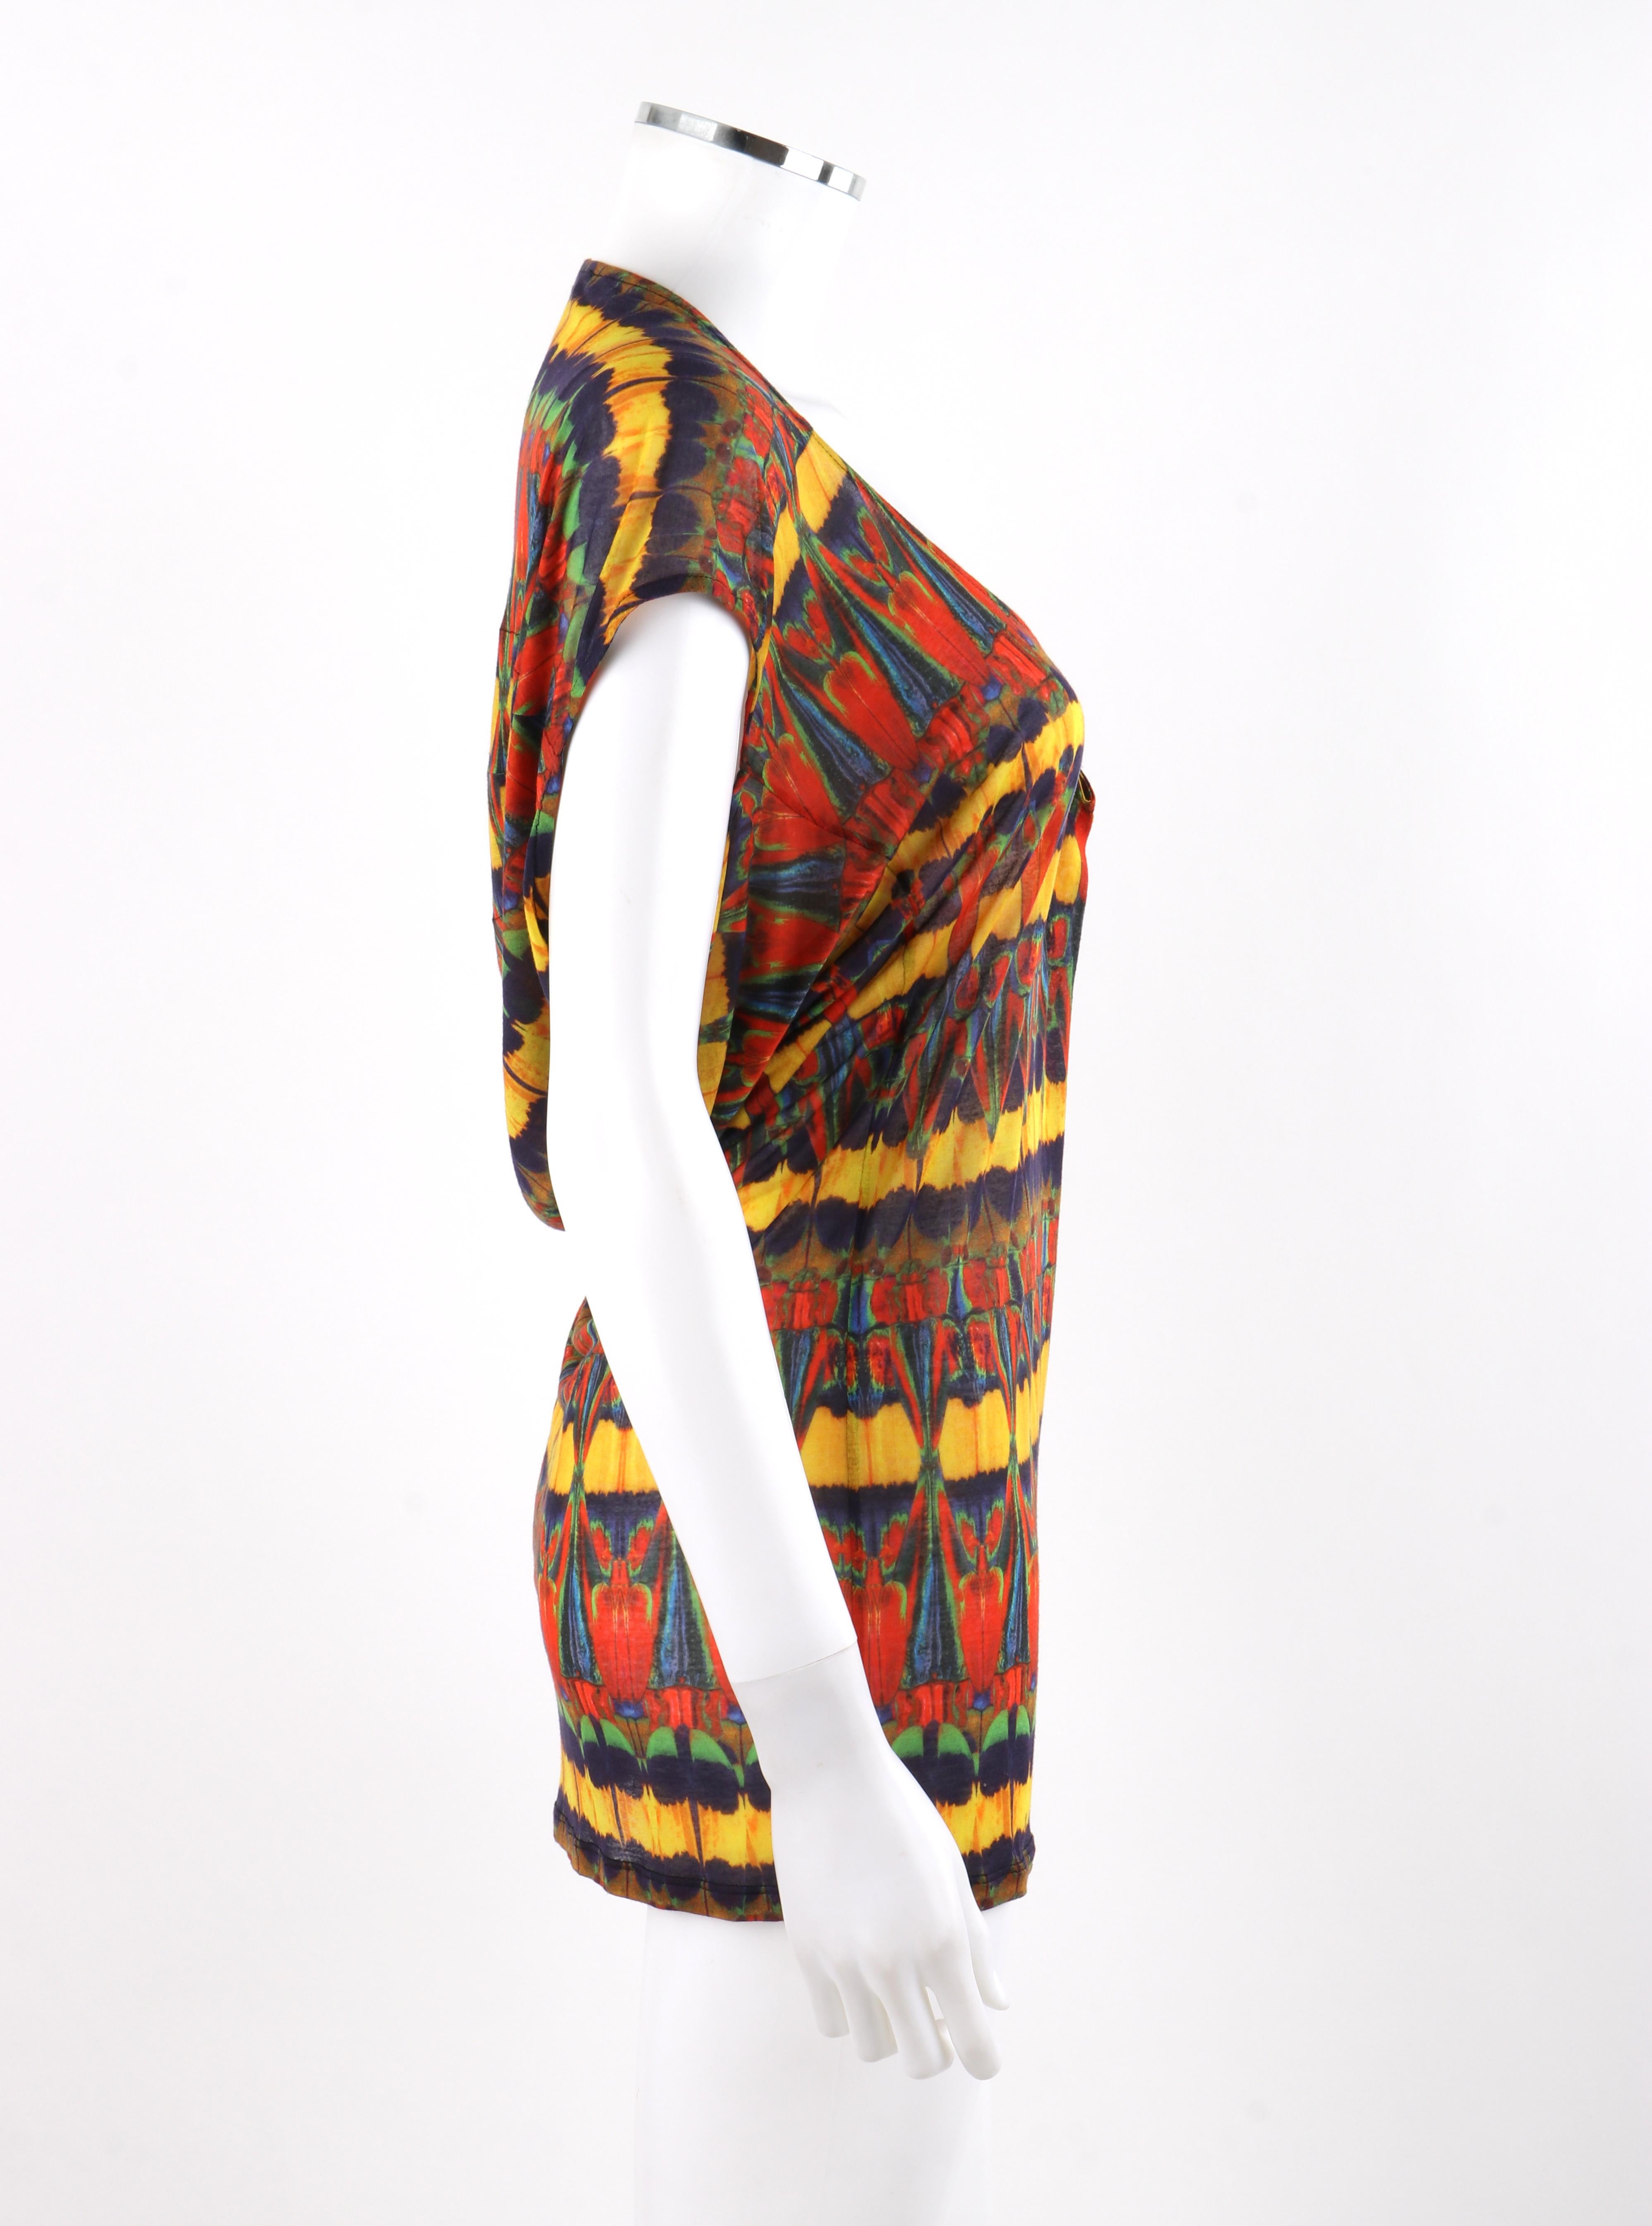 Women's ALEXANDER McQUEEN S/S 2010 “Platos Atlantis” Beetle Kaleidoscope Draped Knit Top For Sale